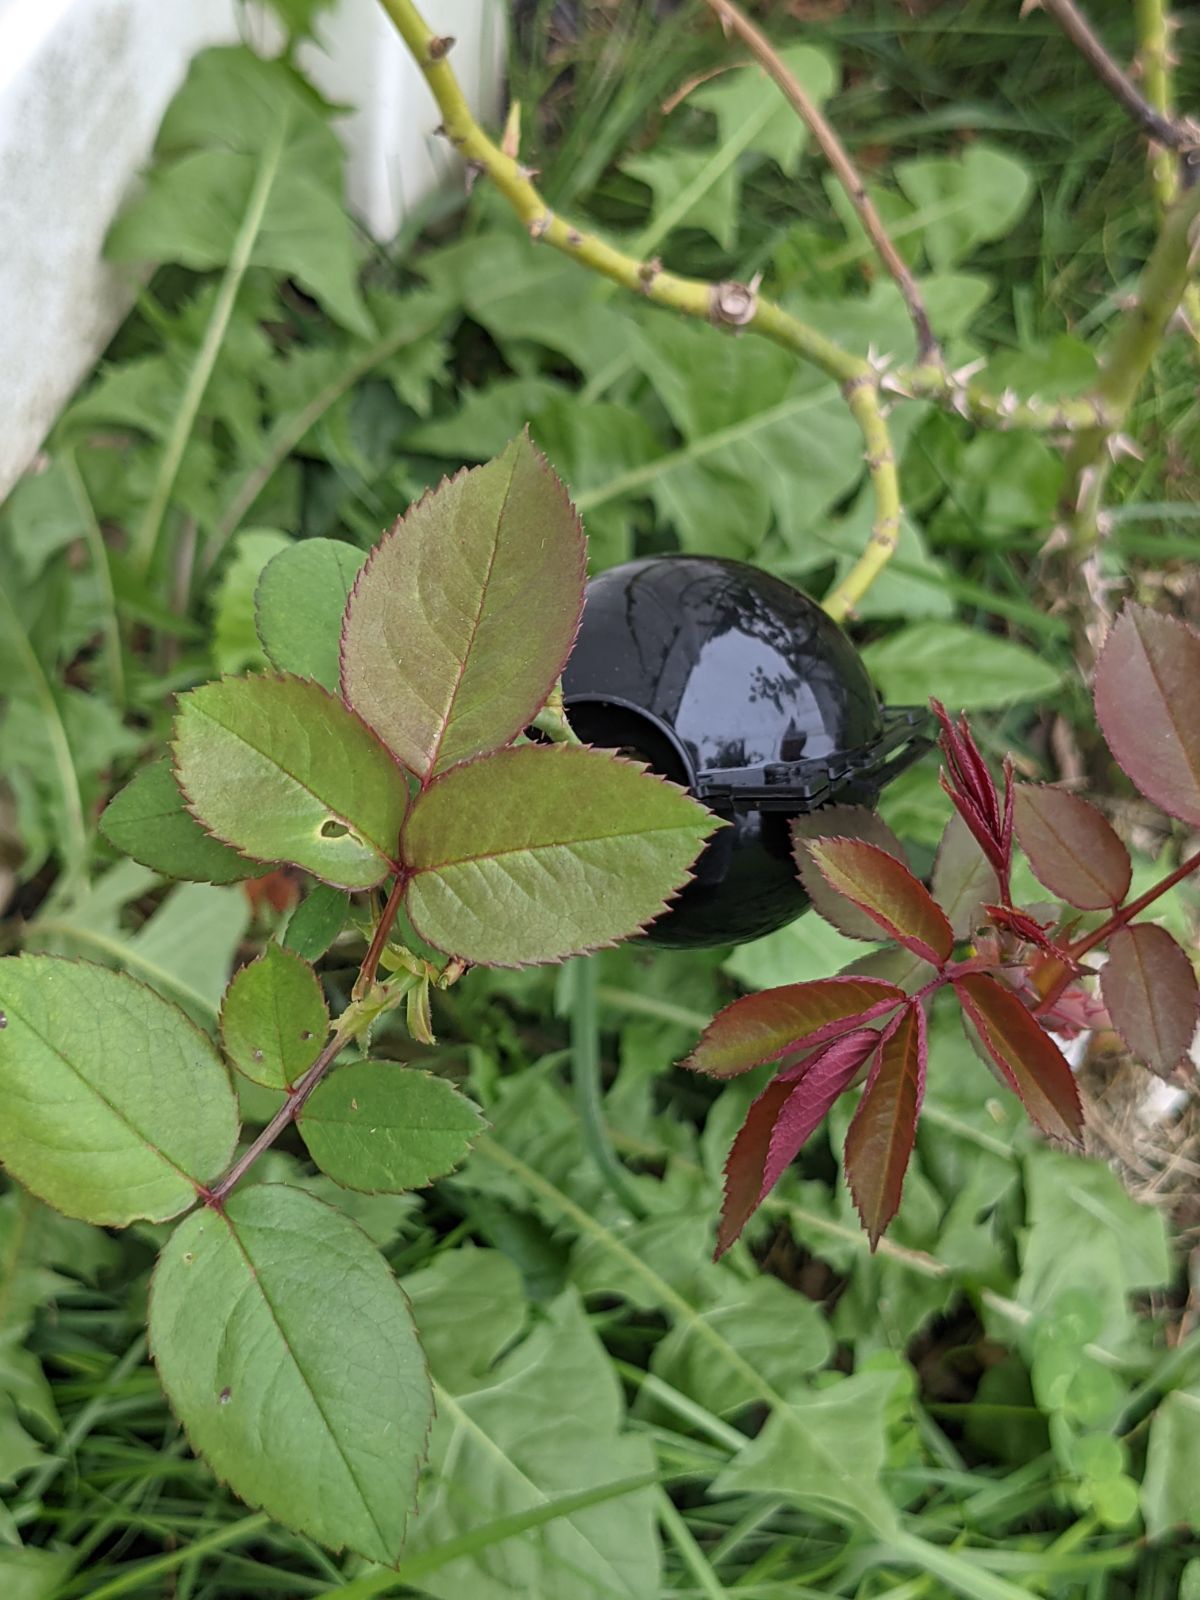 Black air layer ball snapped onto a rose bush stem